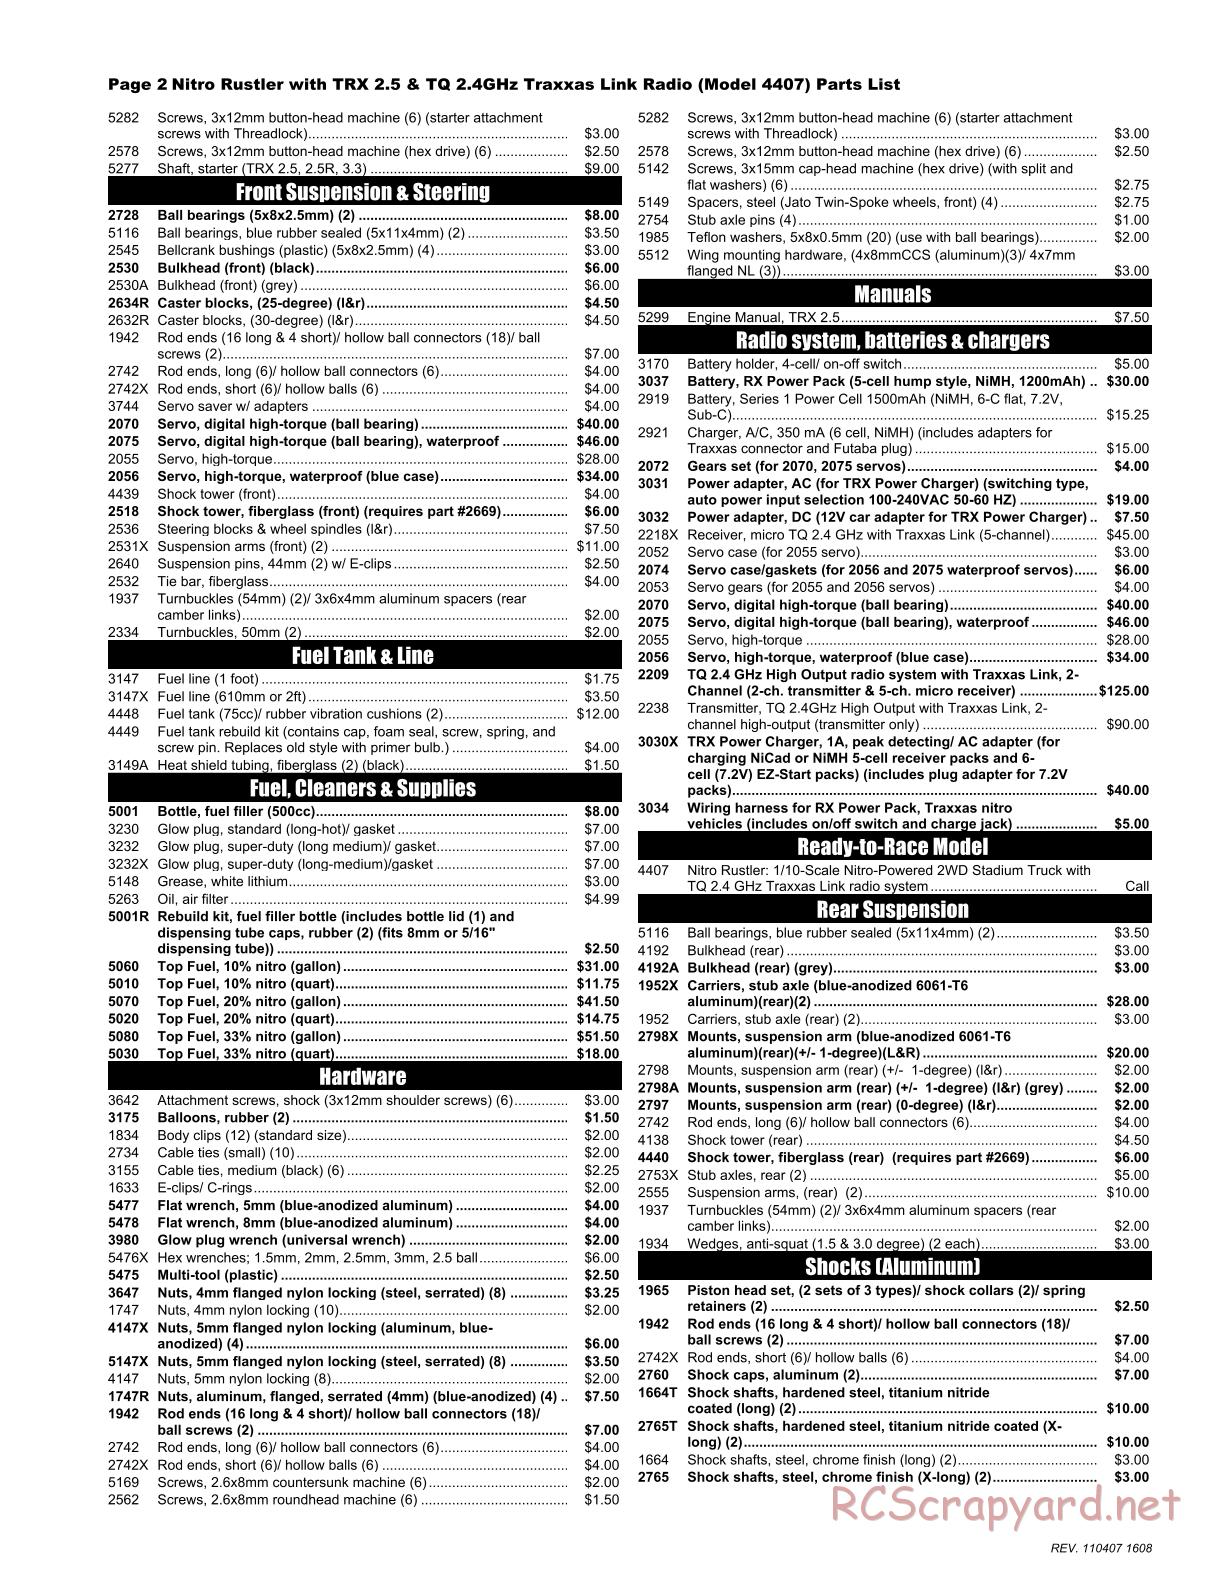 Traxxas - Nitro Rustler (2010) - Parts List - Page 2